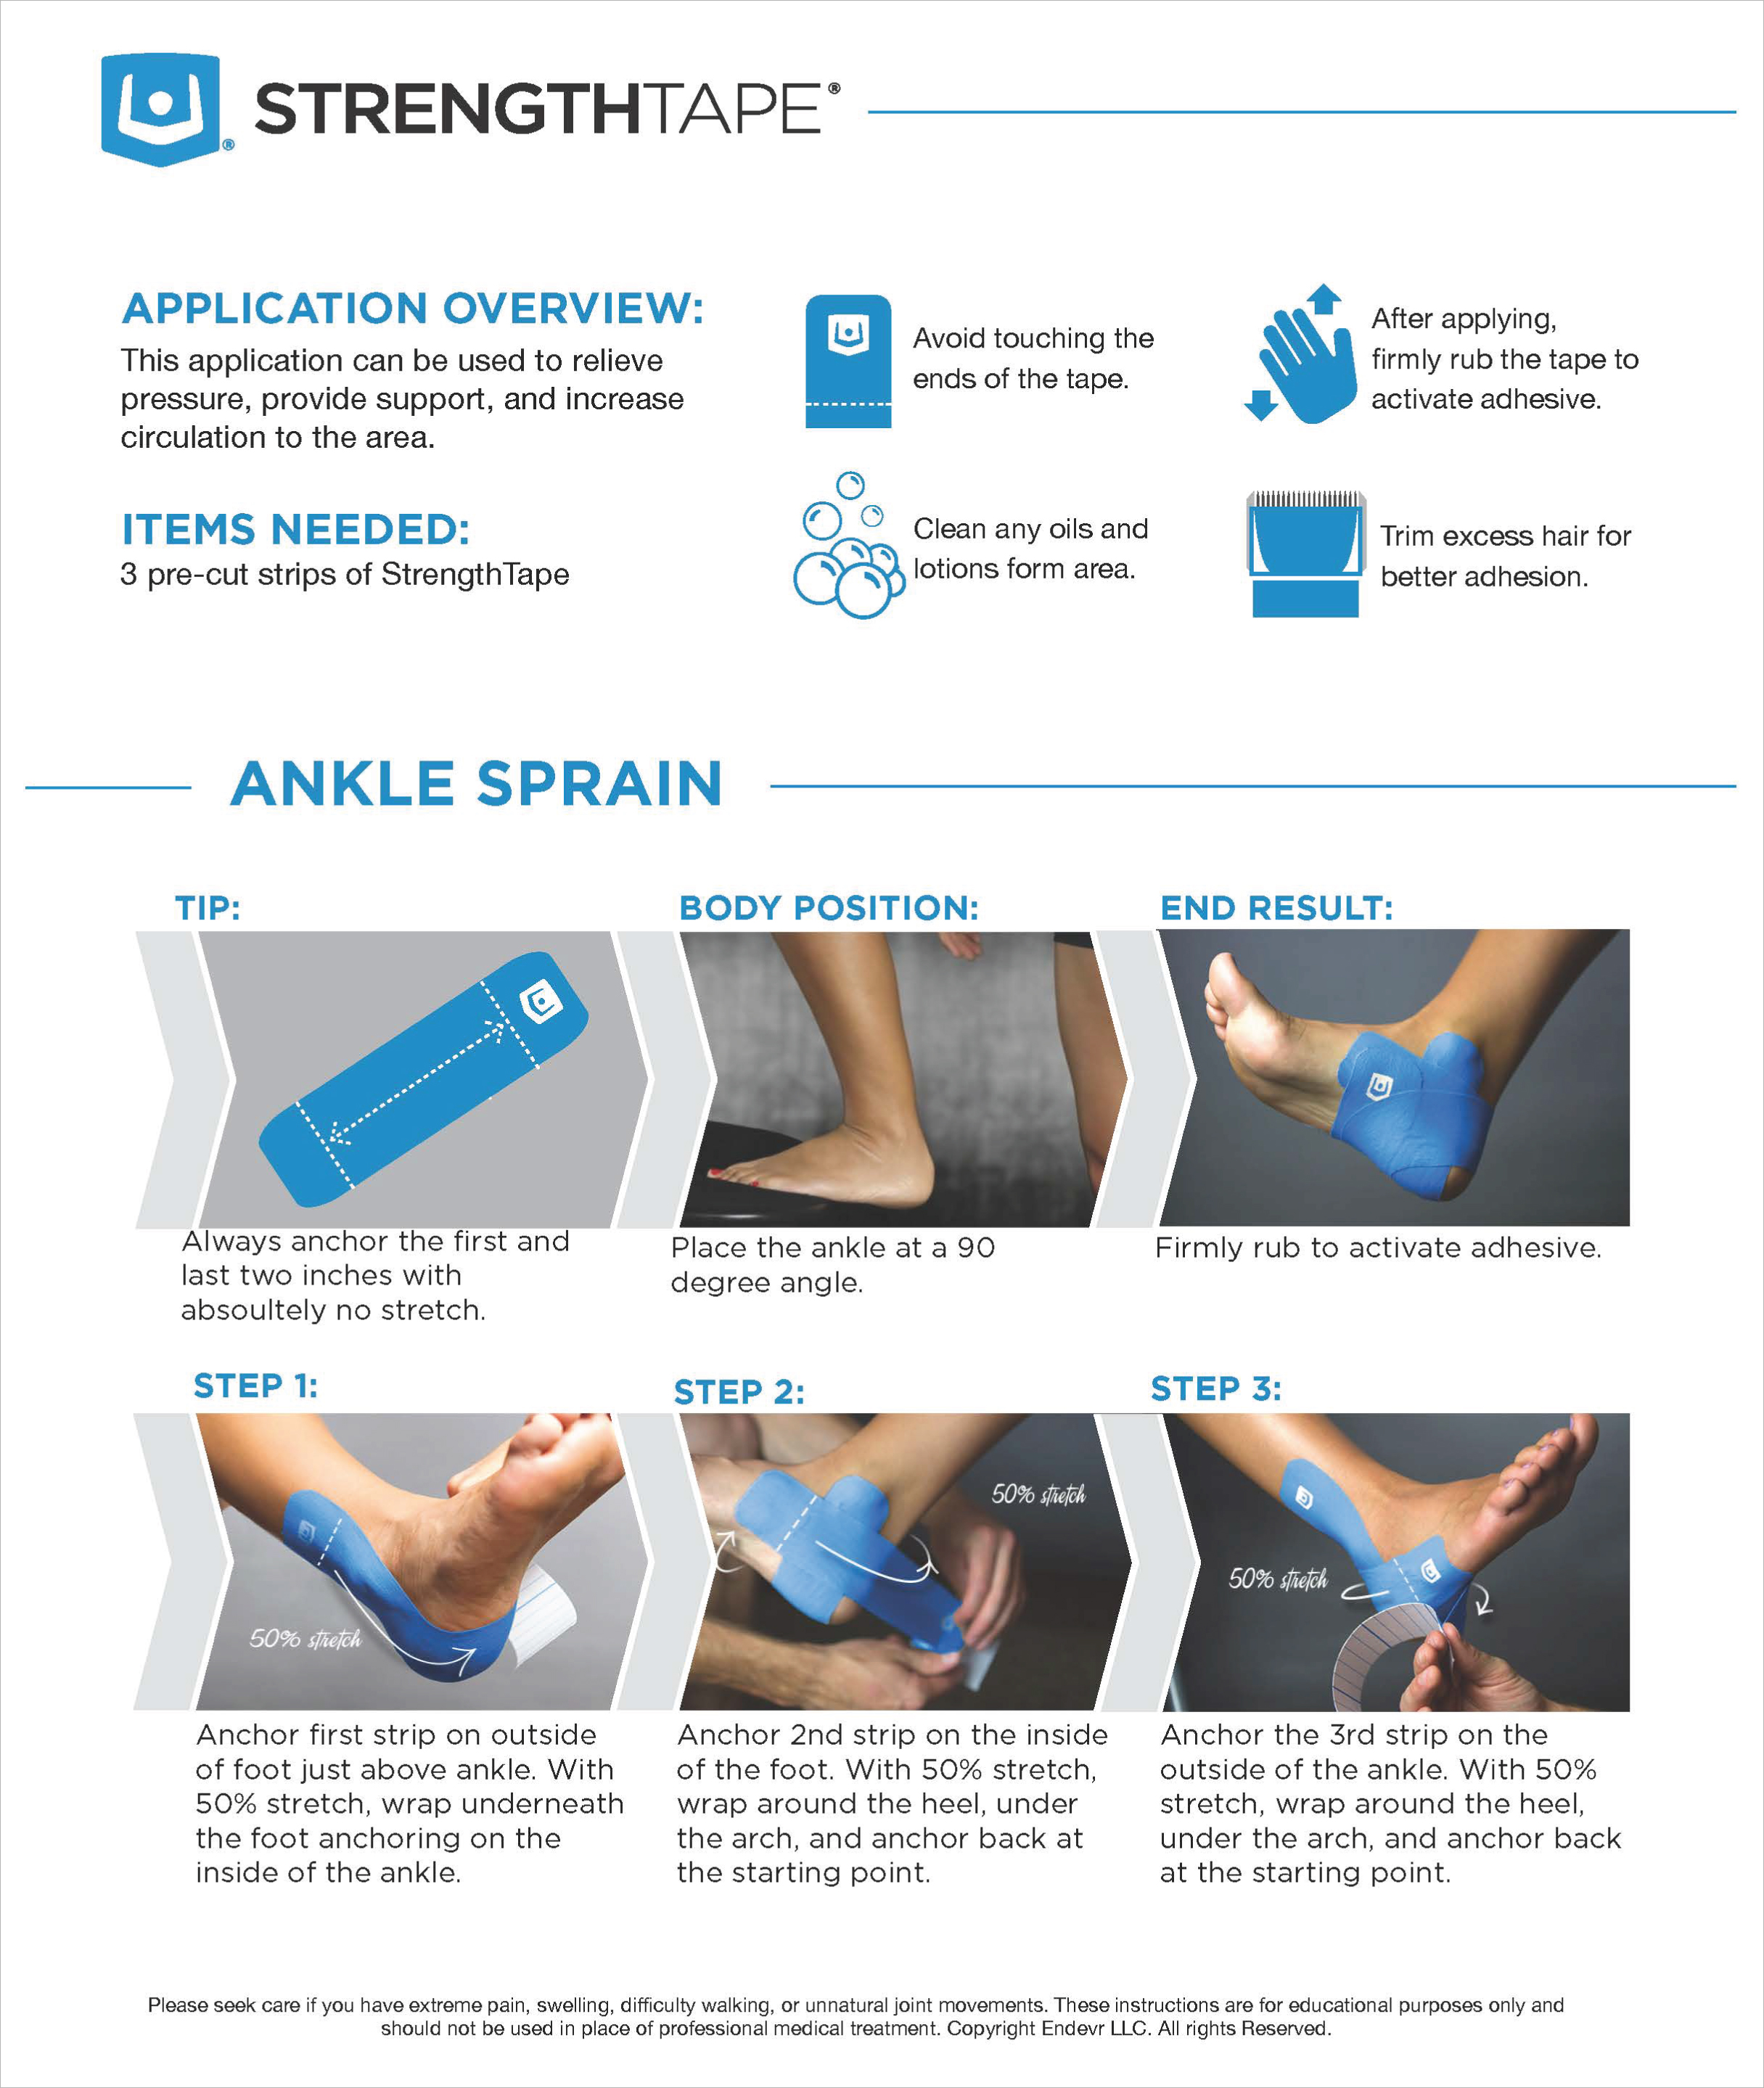 StrengthTape Ankle Sprain Taping Instructions